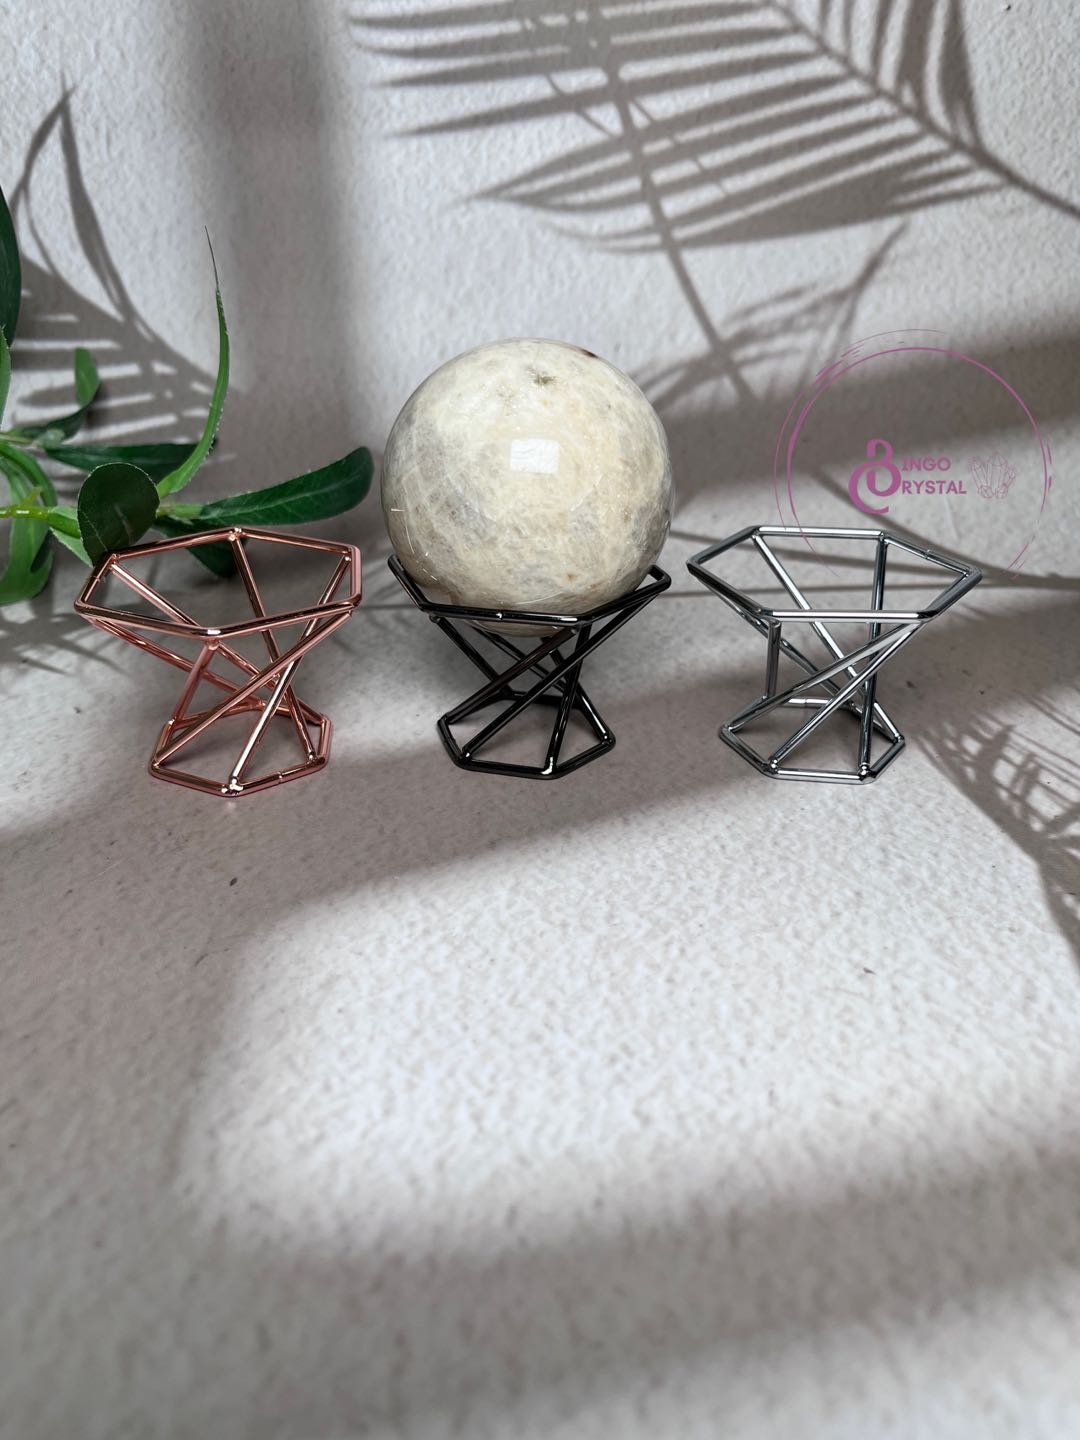 BingoCrystal Sphere & Holder Stands (many styles)